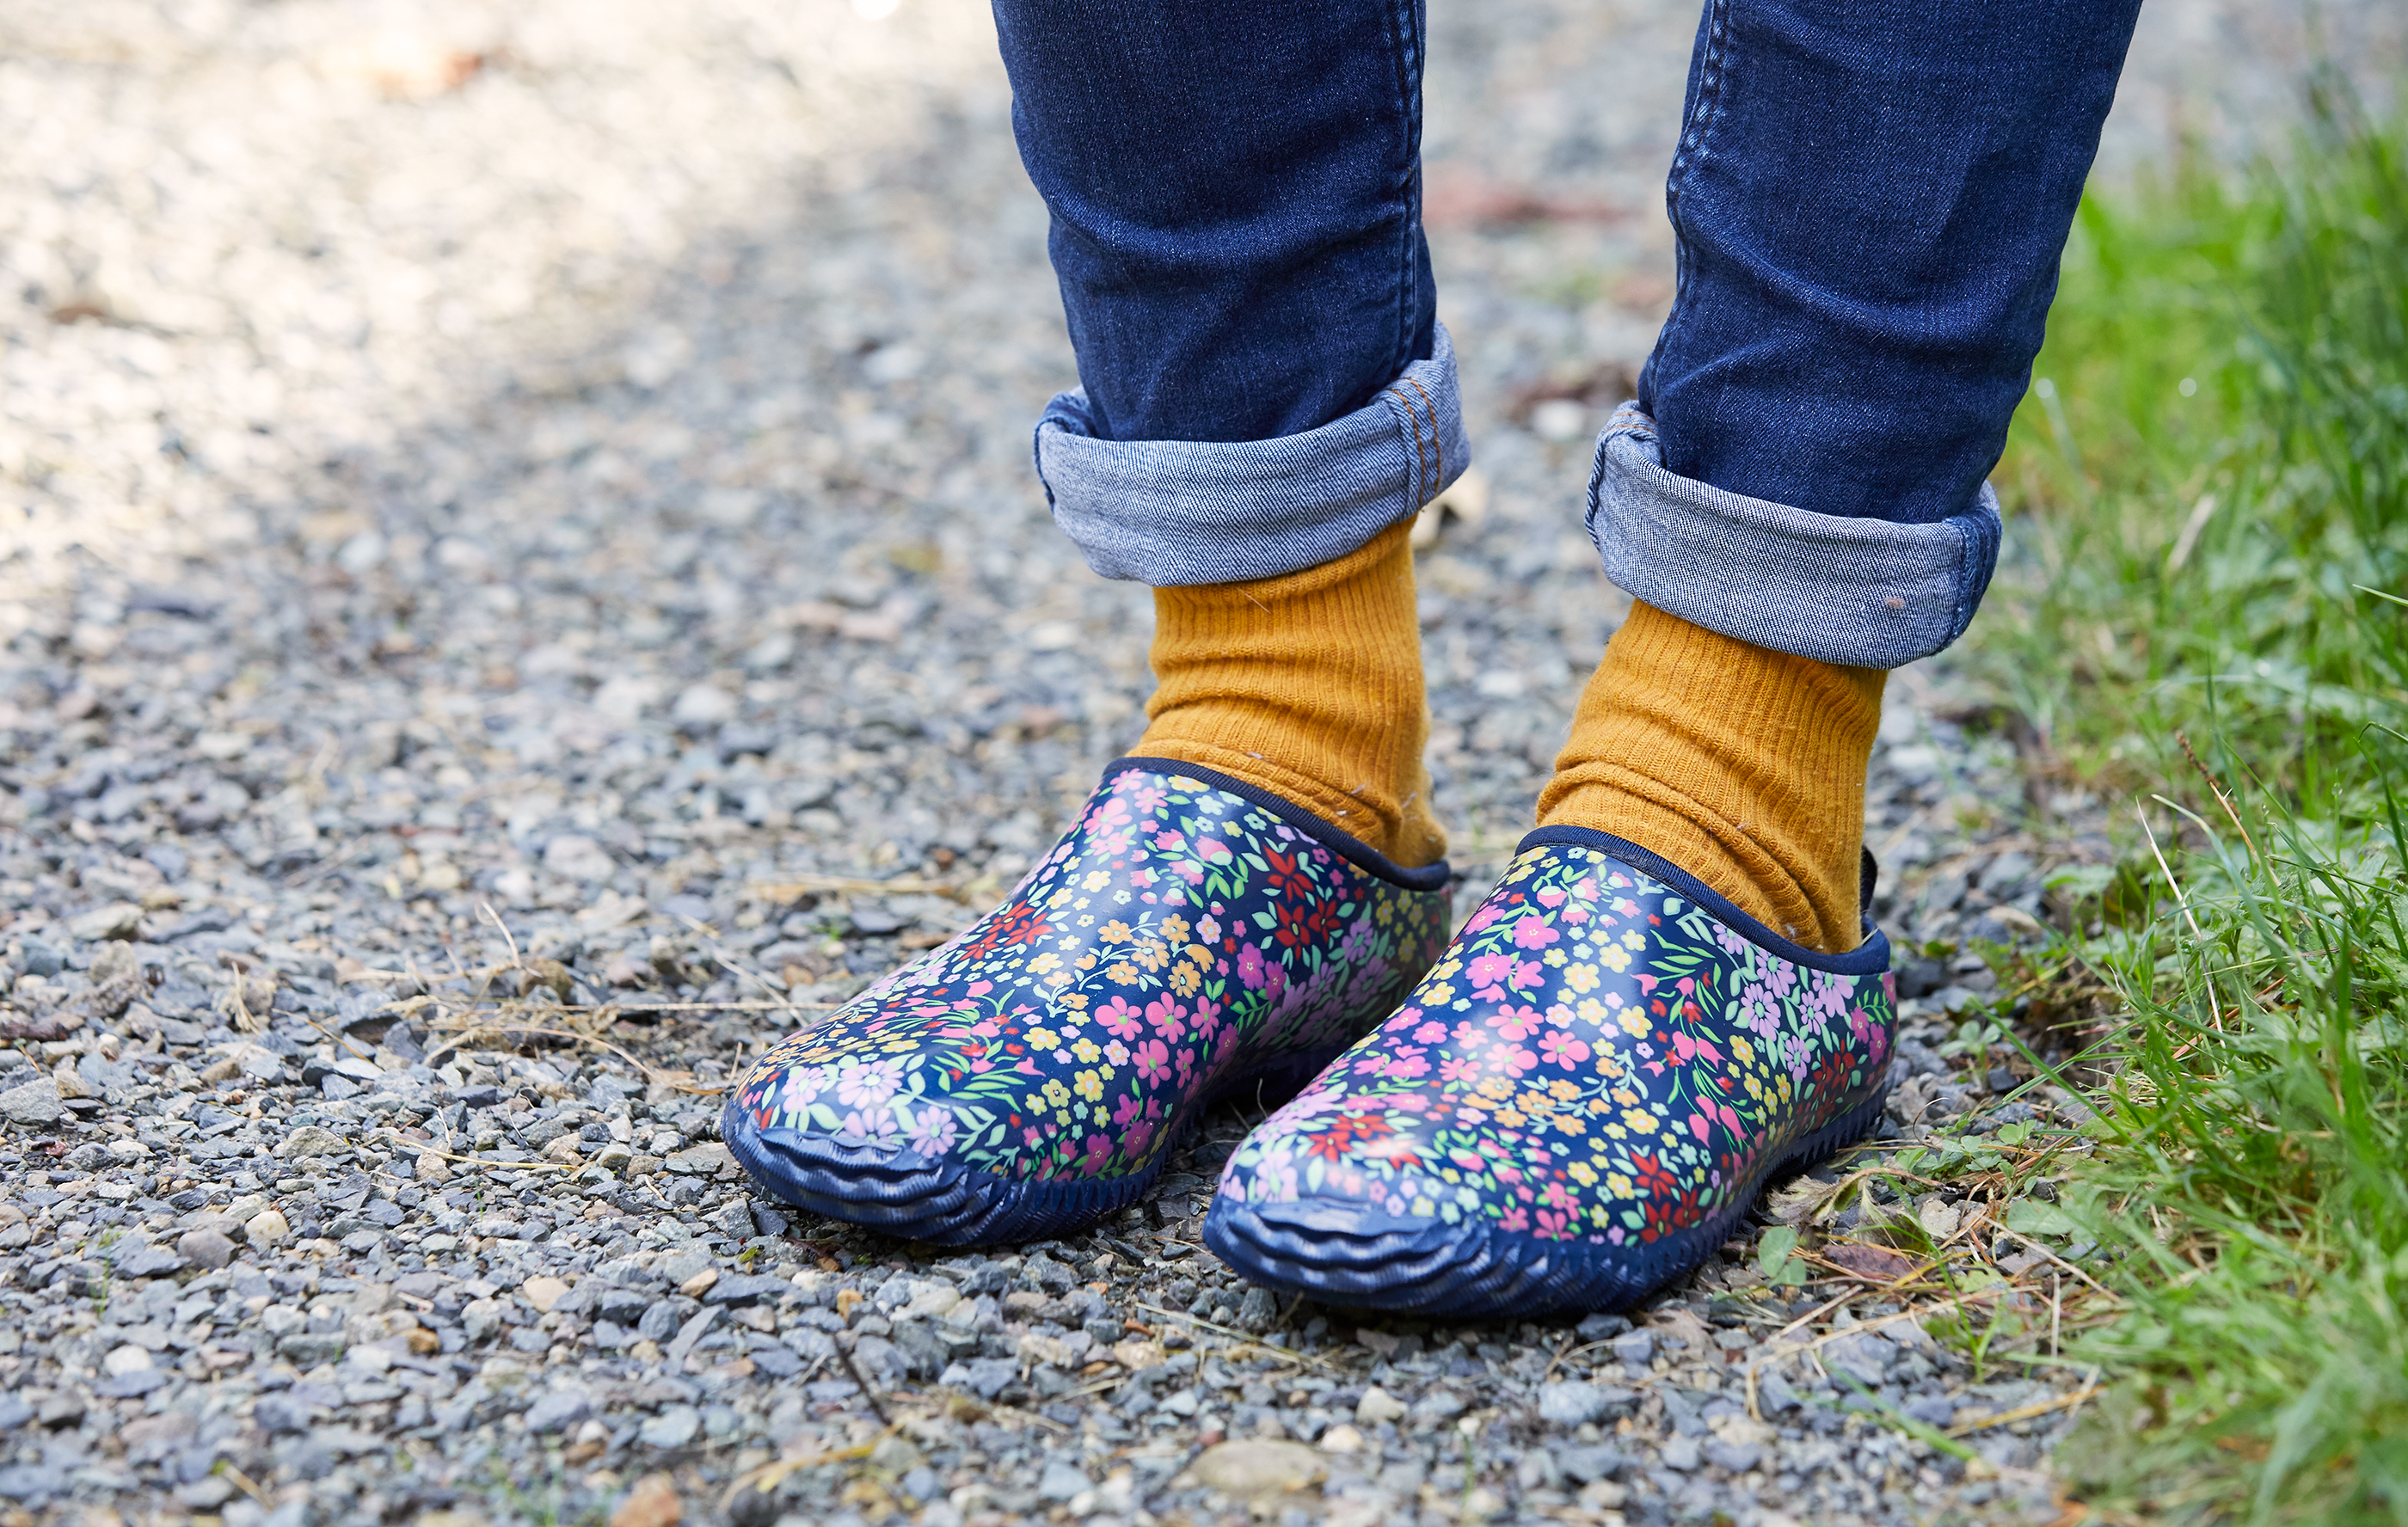 Close-up of women's neoprene garden shoes